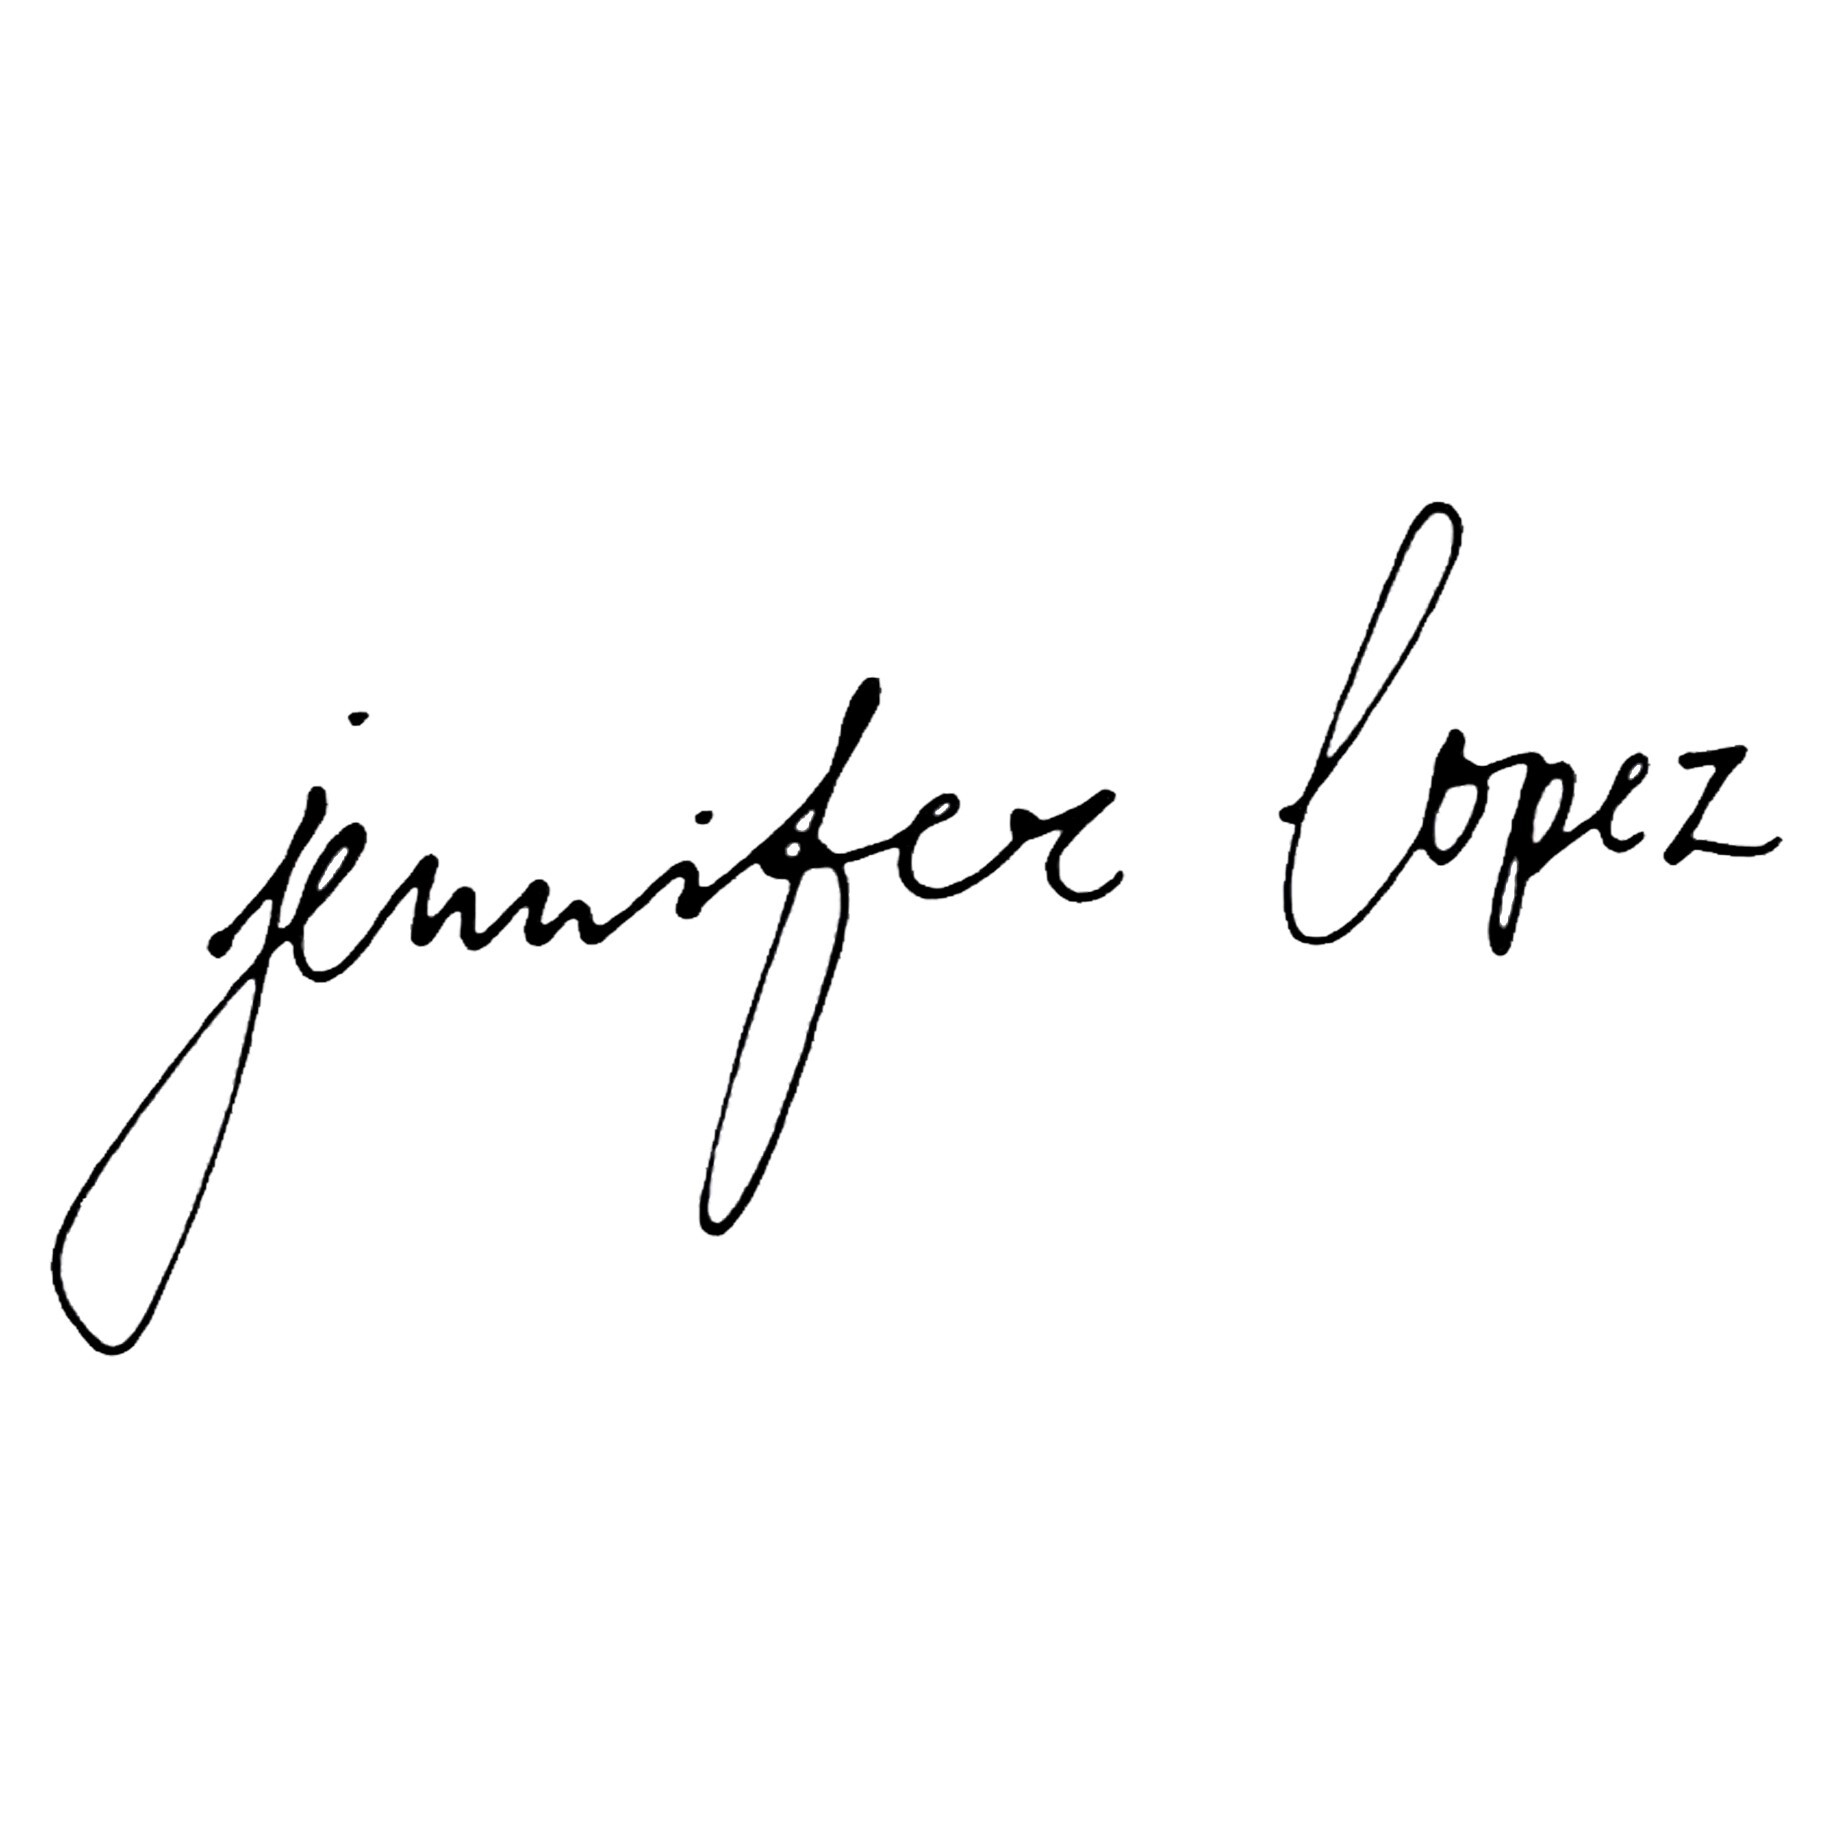 Женские духи Jennifer Lopez